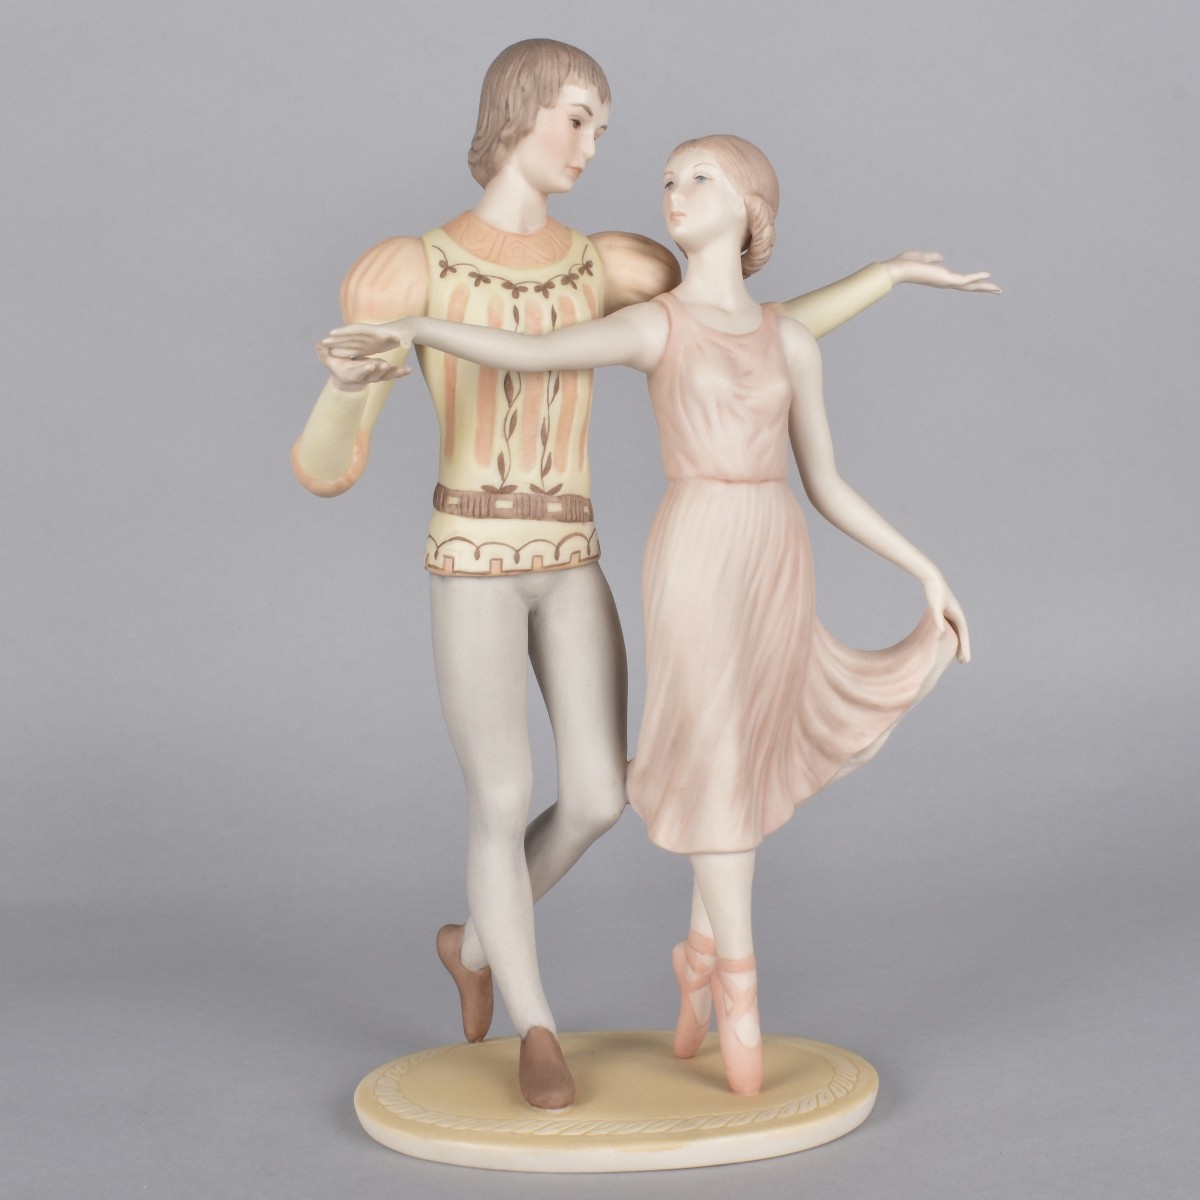 Ispanky Romeo and Juliet Ballet Figurine